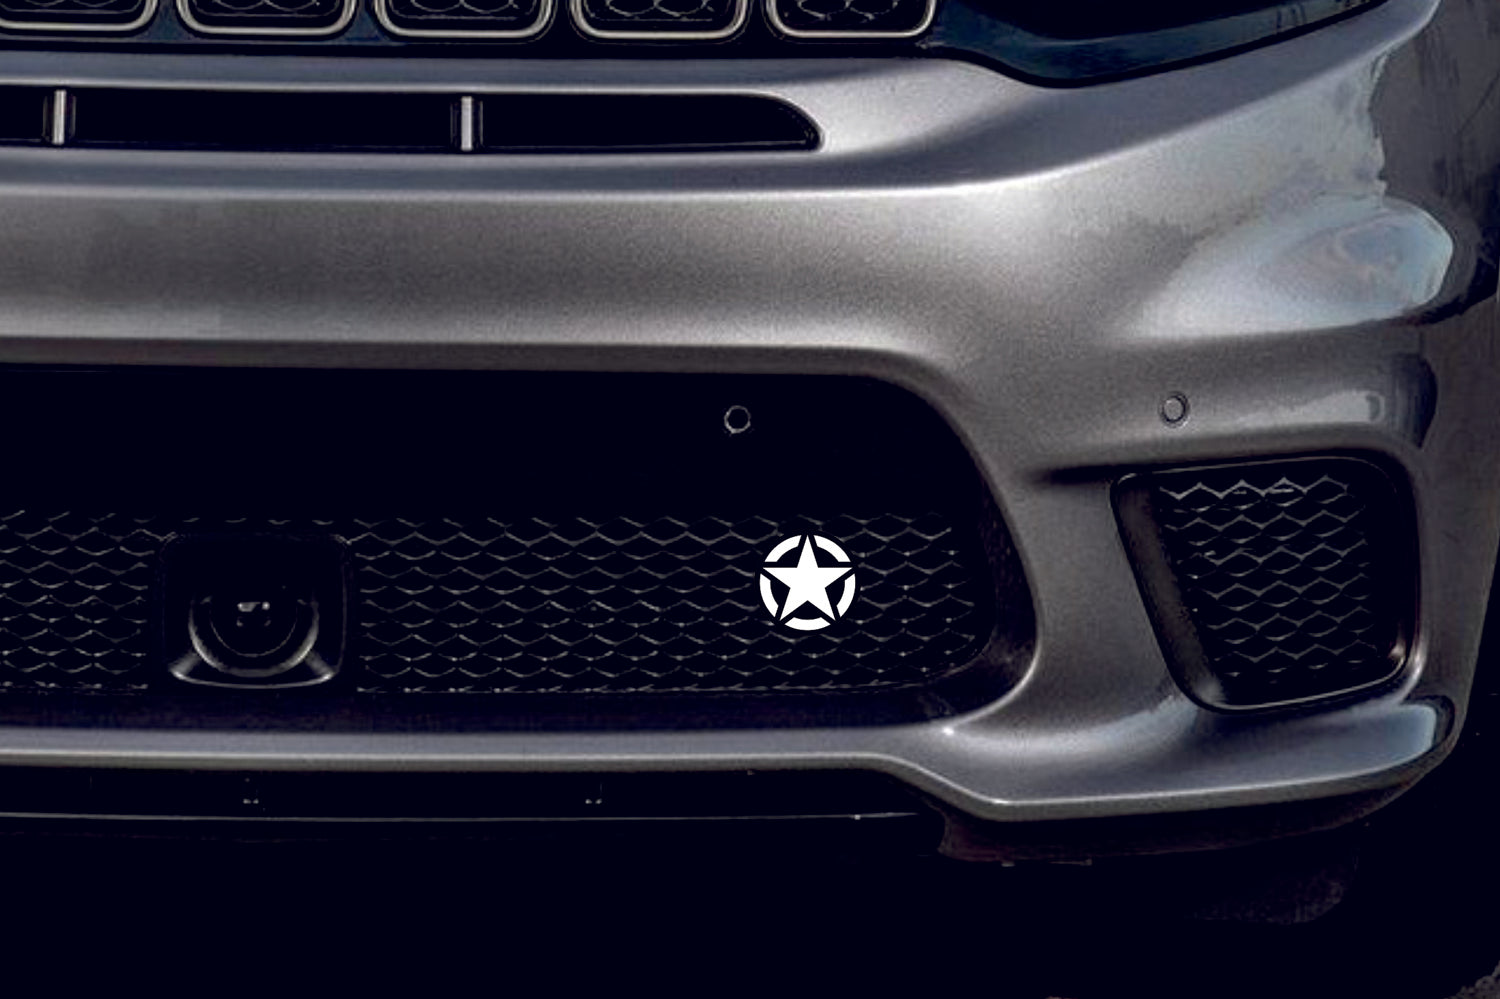 Radiator grille emblem with Star US Army logo - decoinfabric